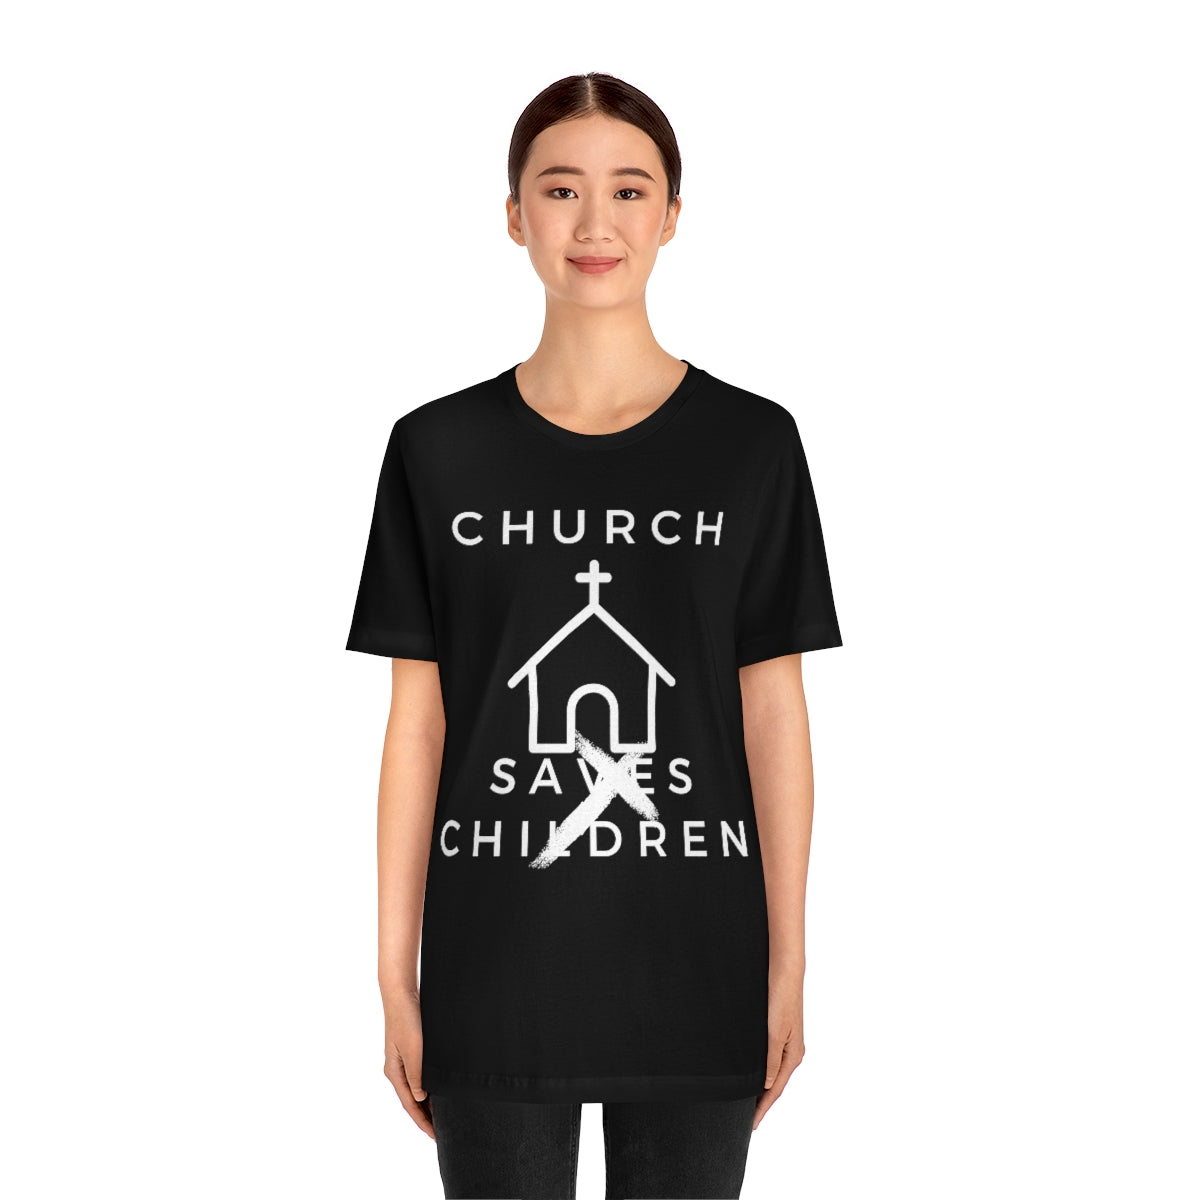 CHURCH SA'S.../OK GROOMER FRONT/BACK Unisex Jersey Short Sleeve Black Tee (SirTalksALot Exclusive)